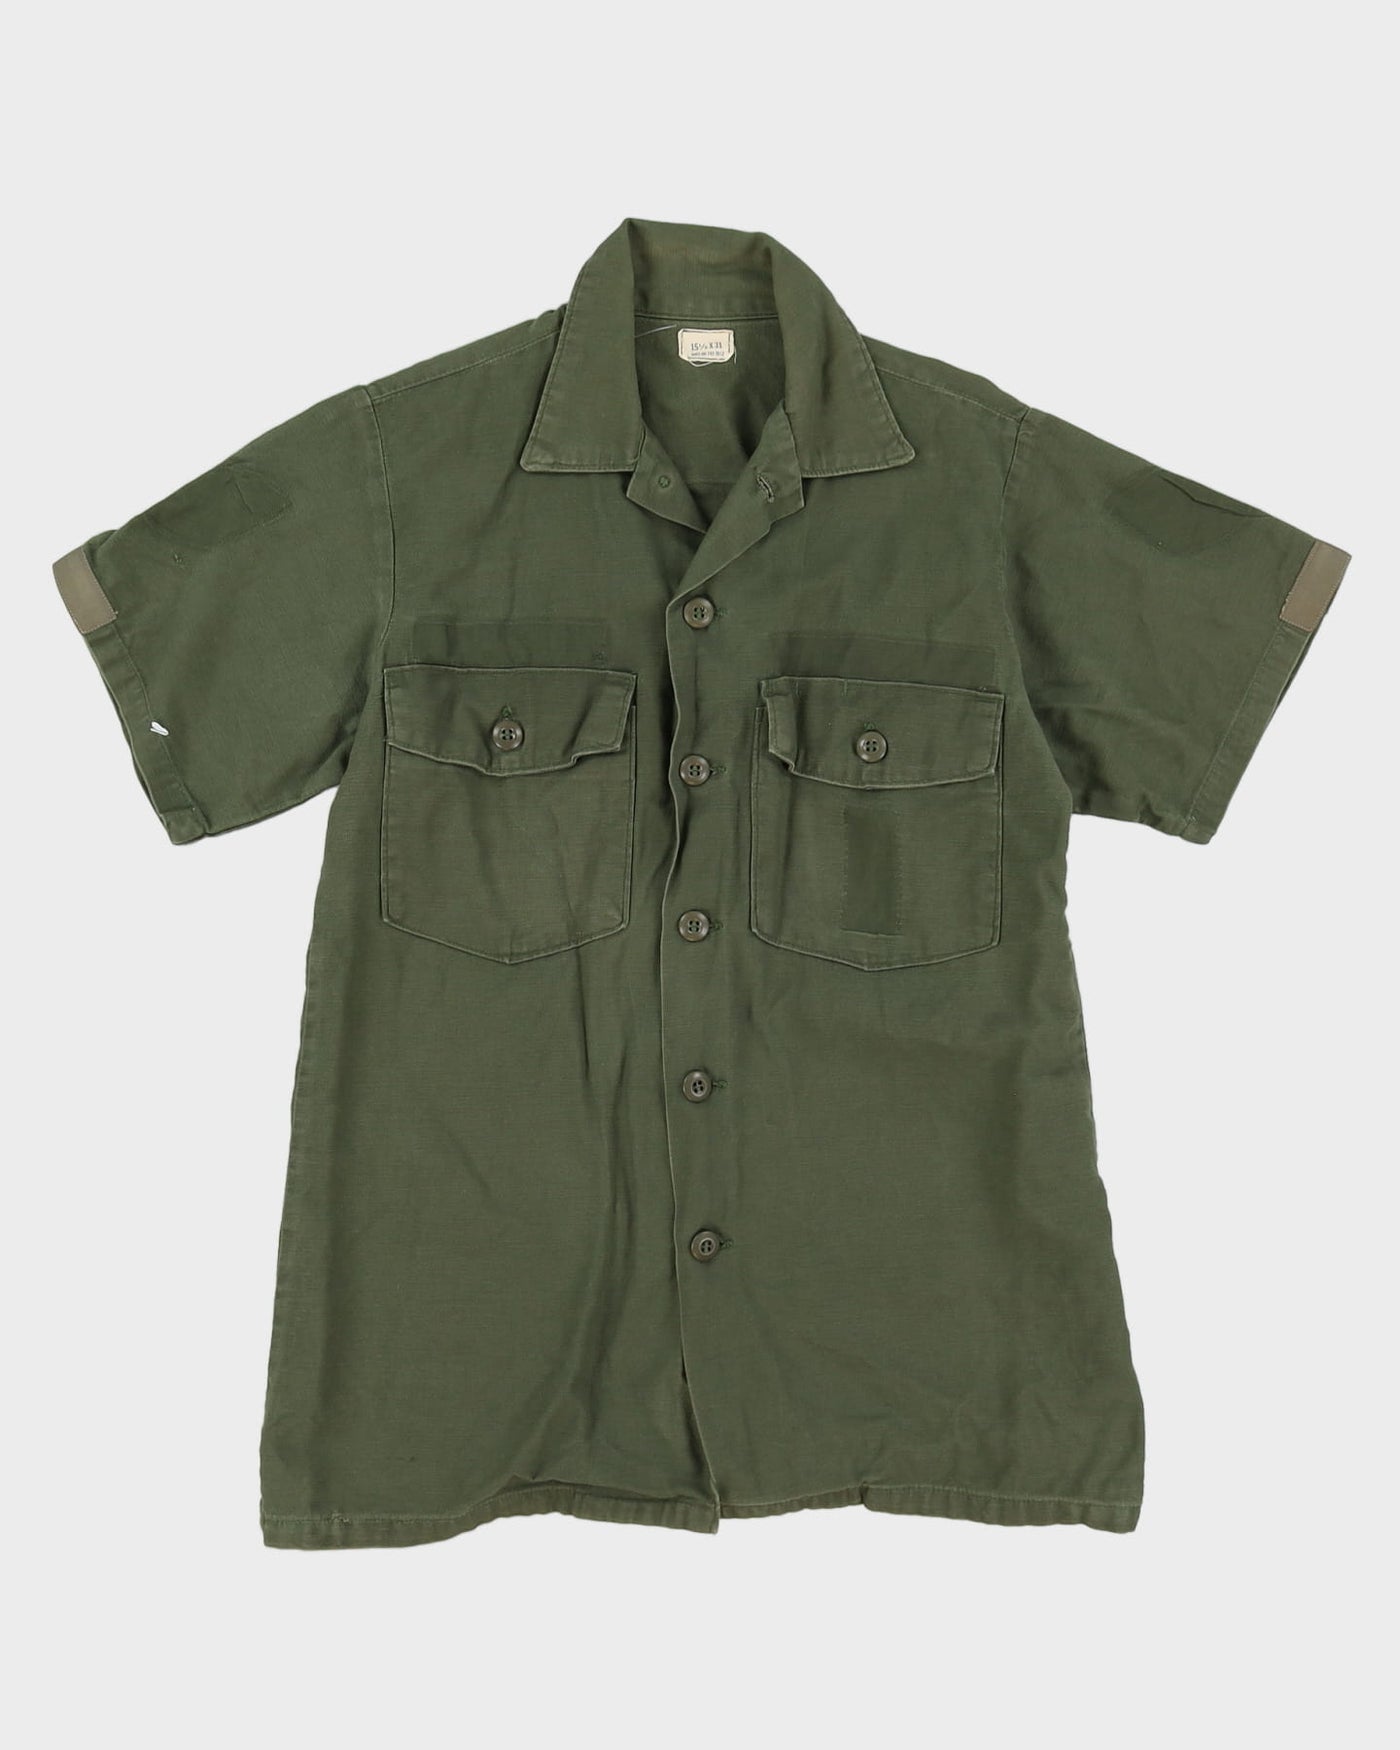 60s Vintage US Military Cotton Utility Shirt - M